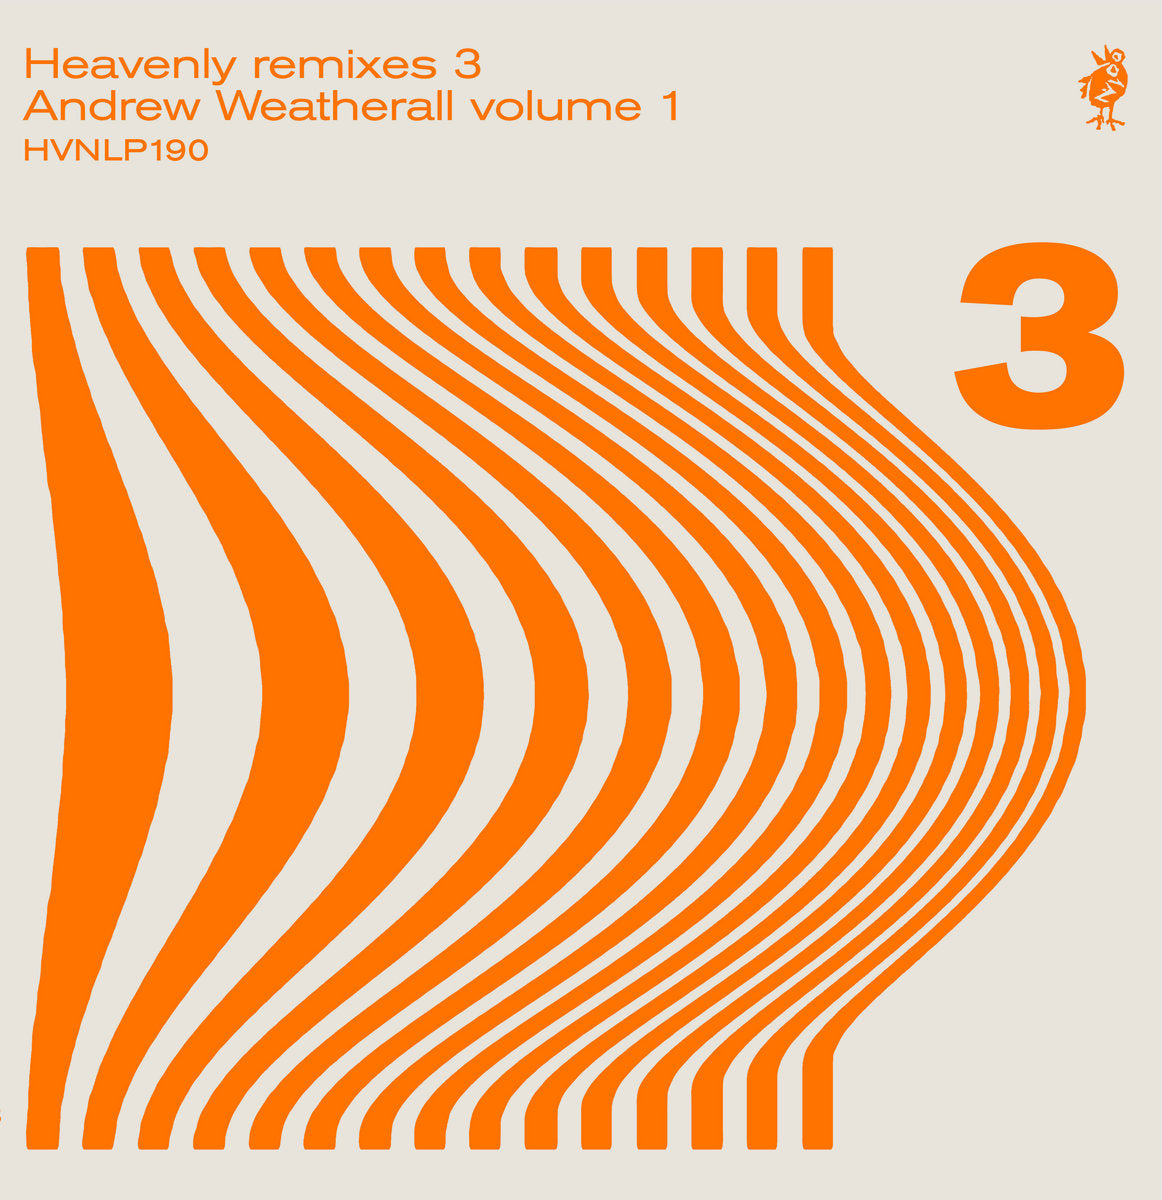 HEAVENLY REMIXES 3 - Andrew Weatherall volume 1